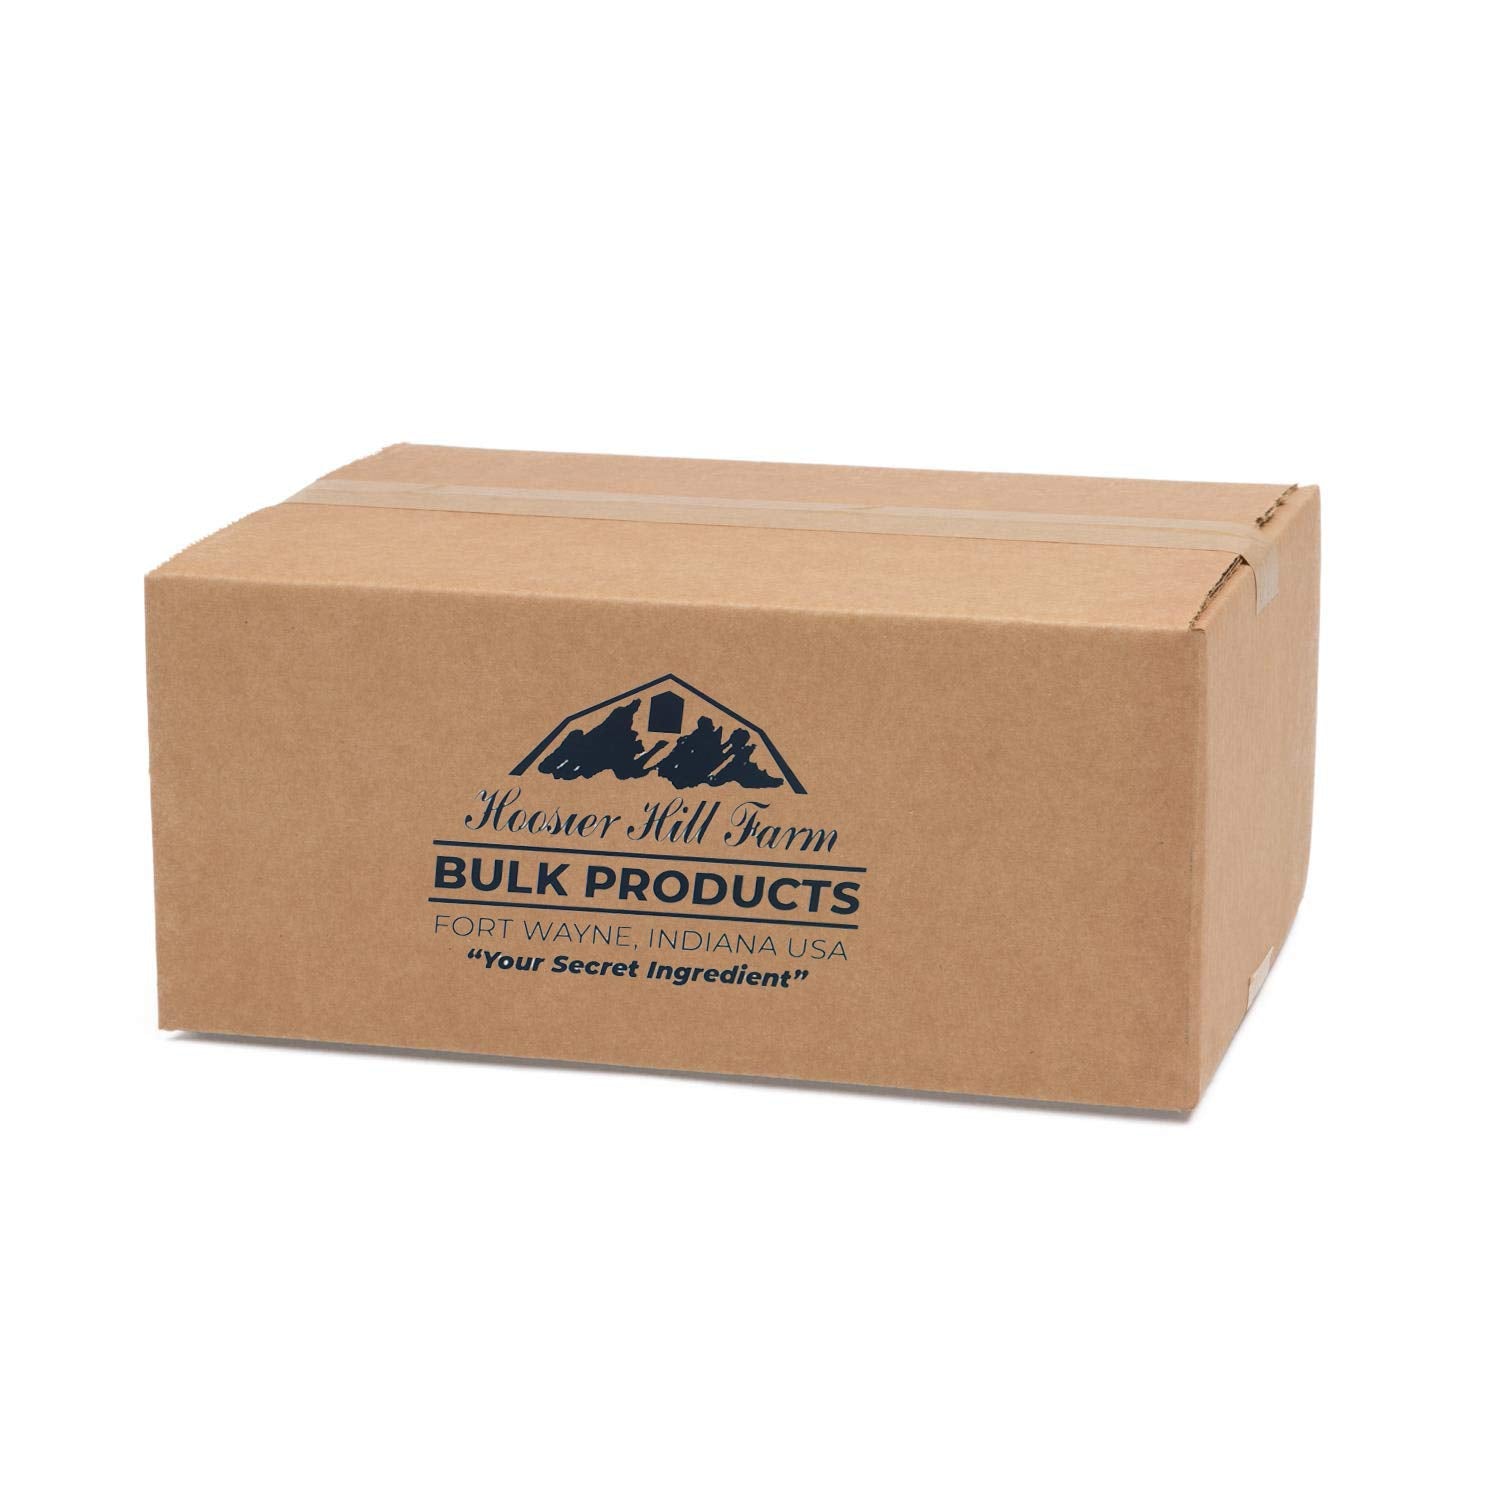 Buttermilk Powder by Hoosier Hill Farm, 25LB BULK (Pack of 1)